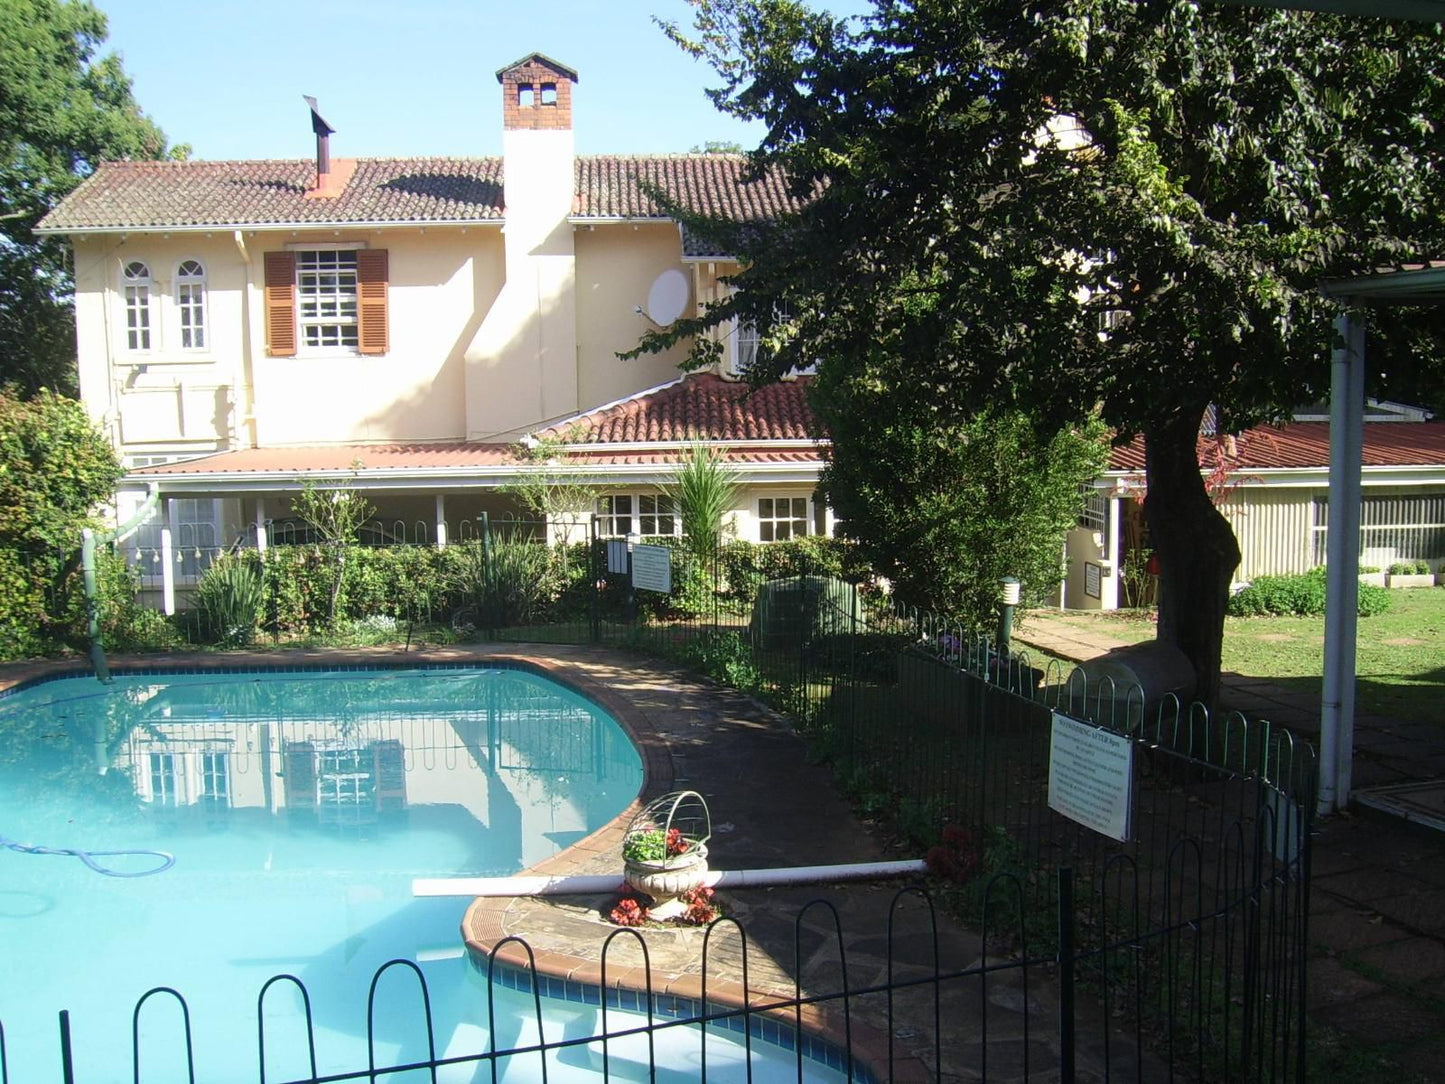 Nutmeg Bandb Howick Kwazulu Natal South Africa House, Building, Architecture, Swimming Pool